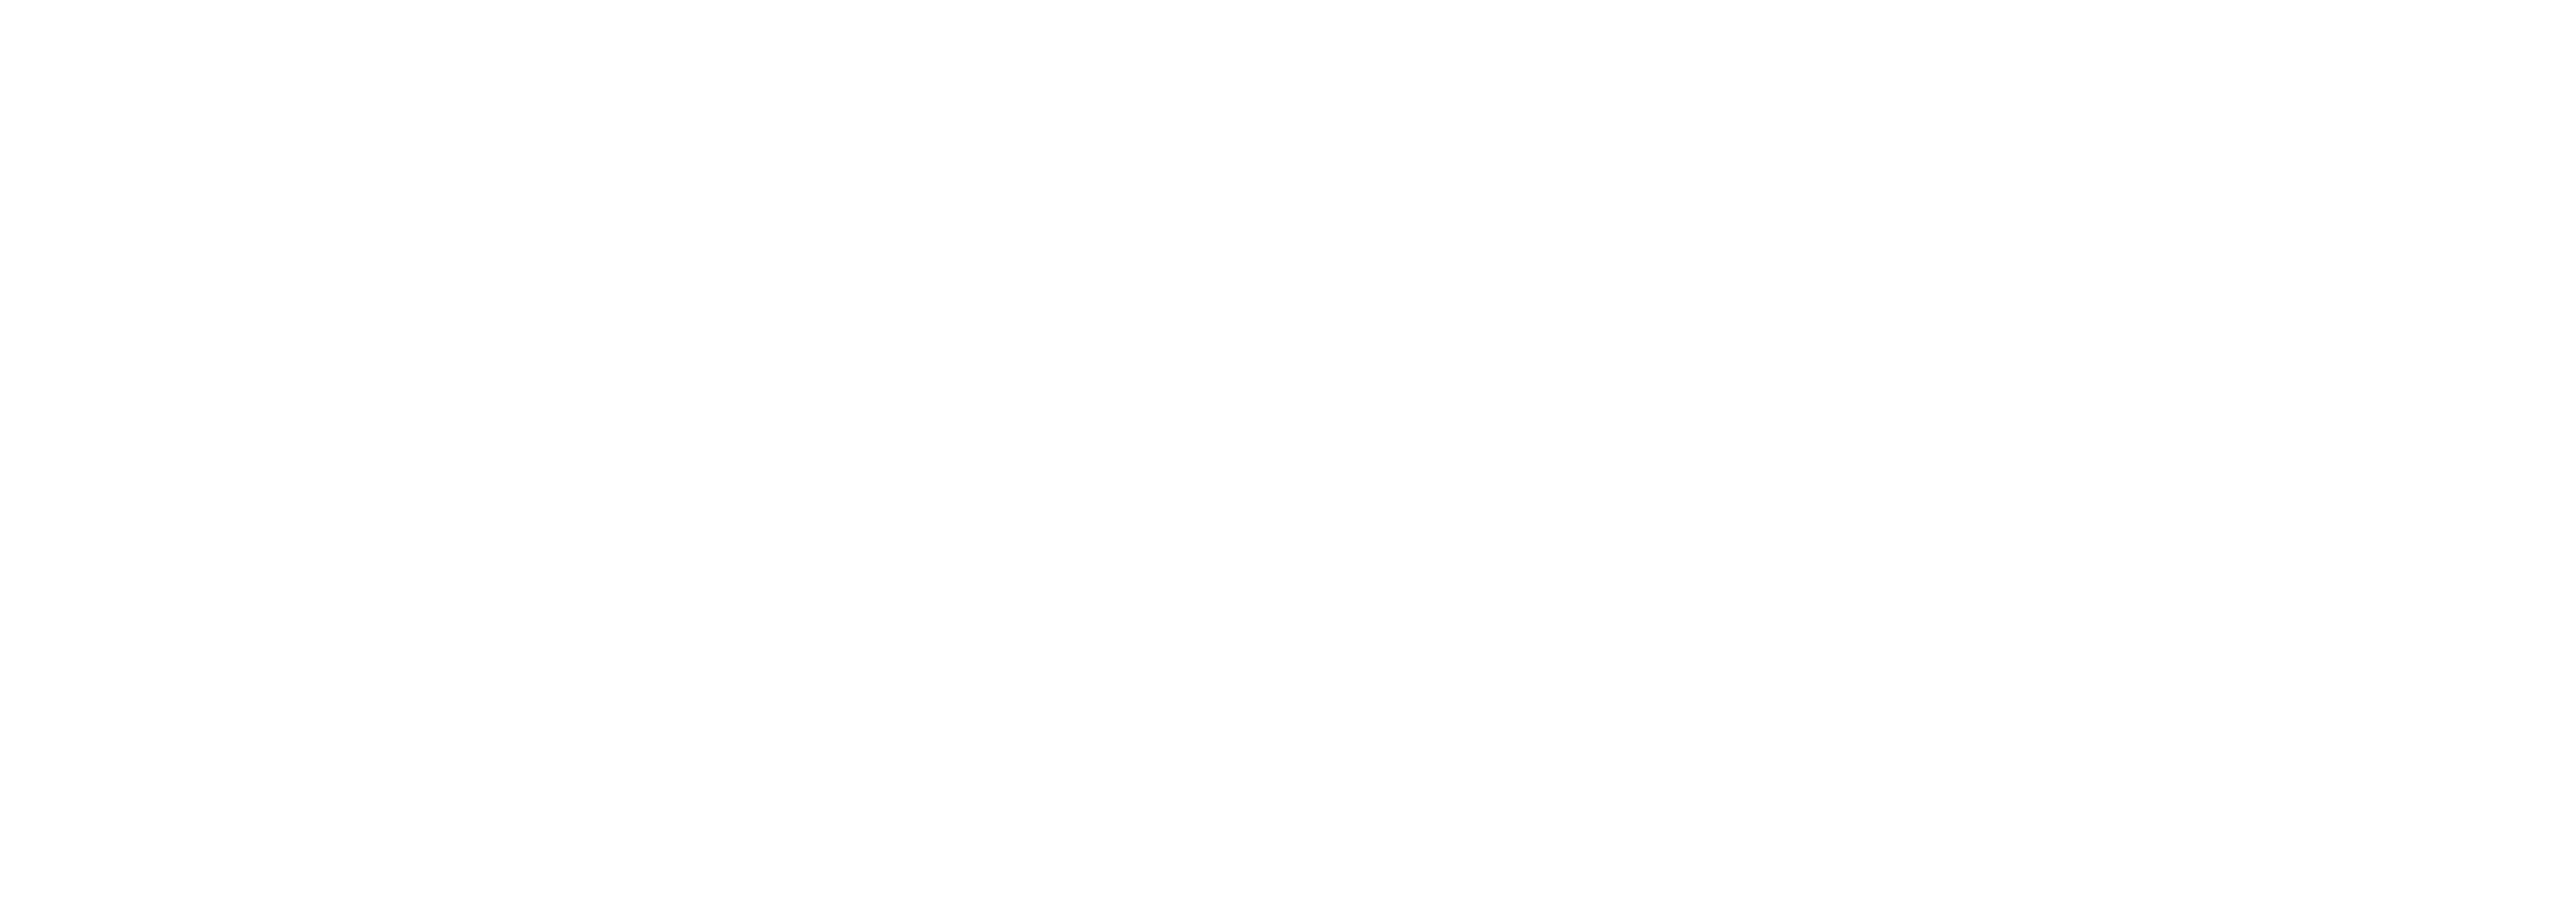 July 2019 - Big Brothers Big Sisters of Halton and Hamilton